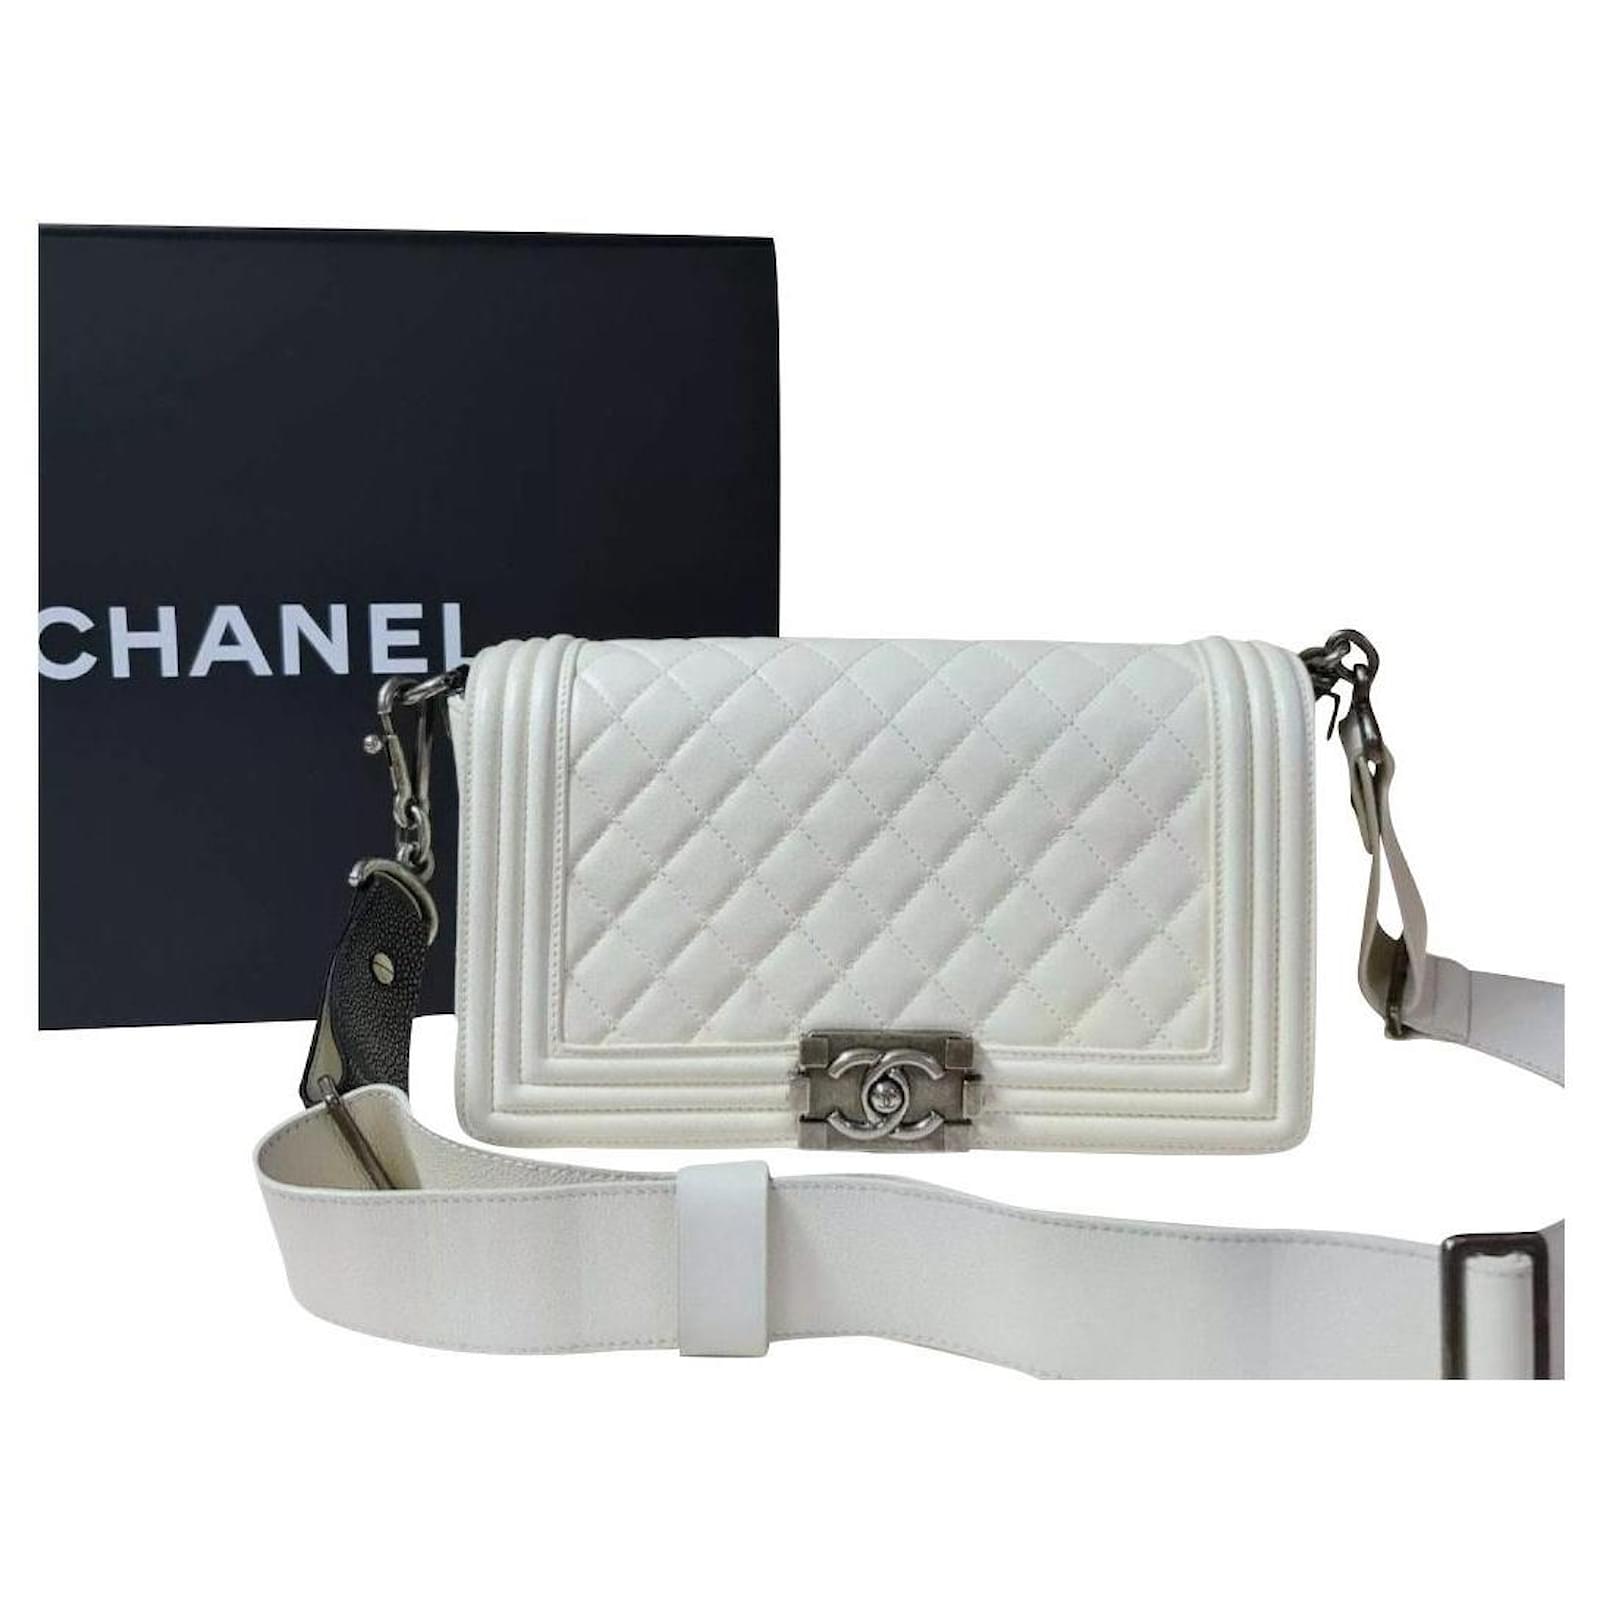 Chanel Boy Bag Prices